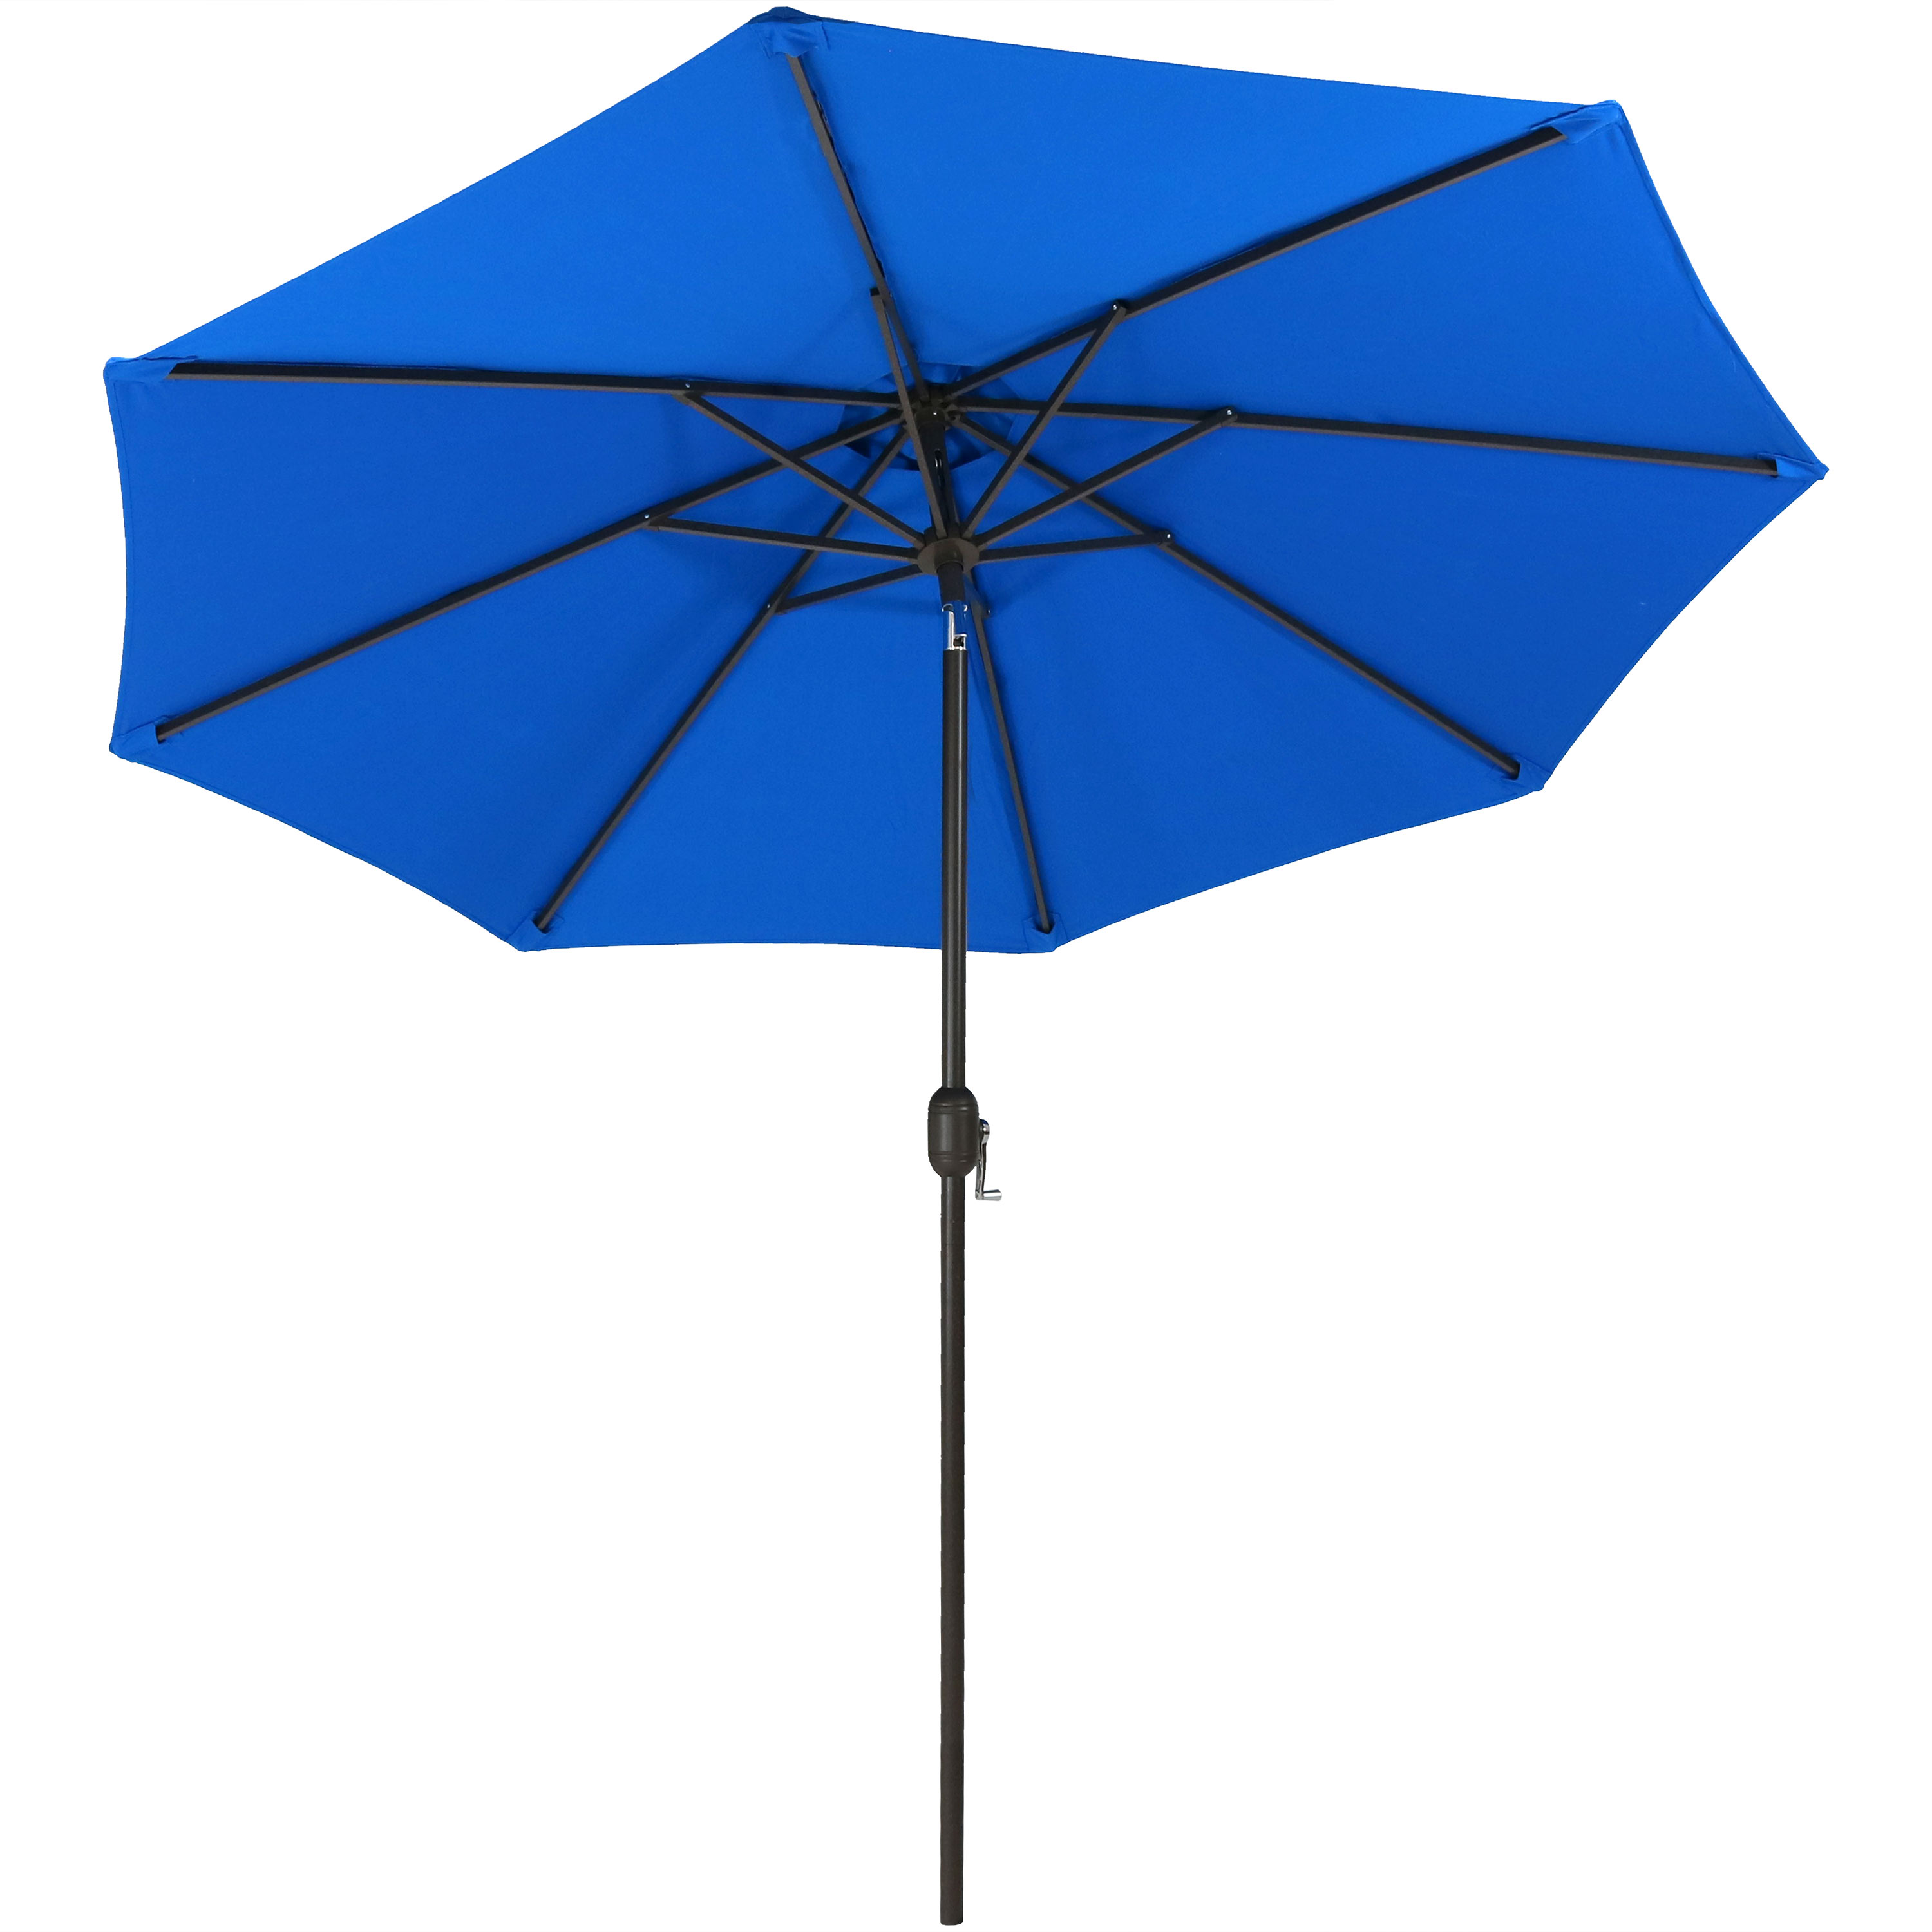 Sunnydaze 9-Foot Aluminum Sunbrella Market Umbrella with Auto Tilt and Crank, Pacific Blue